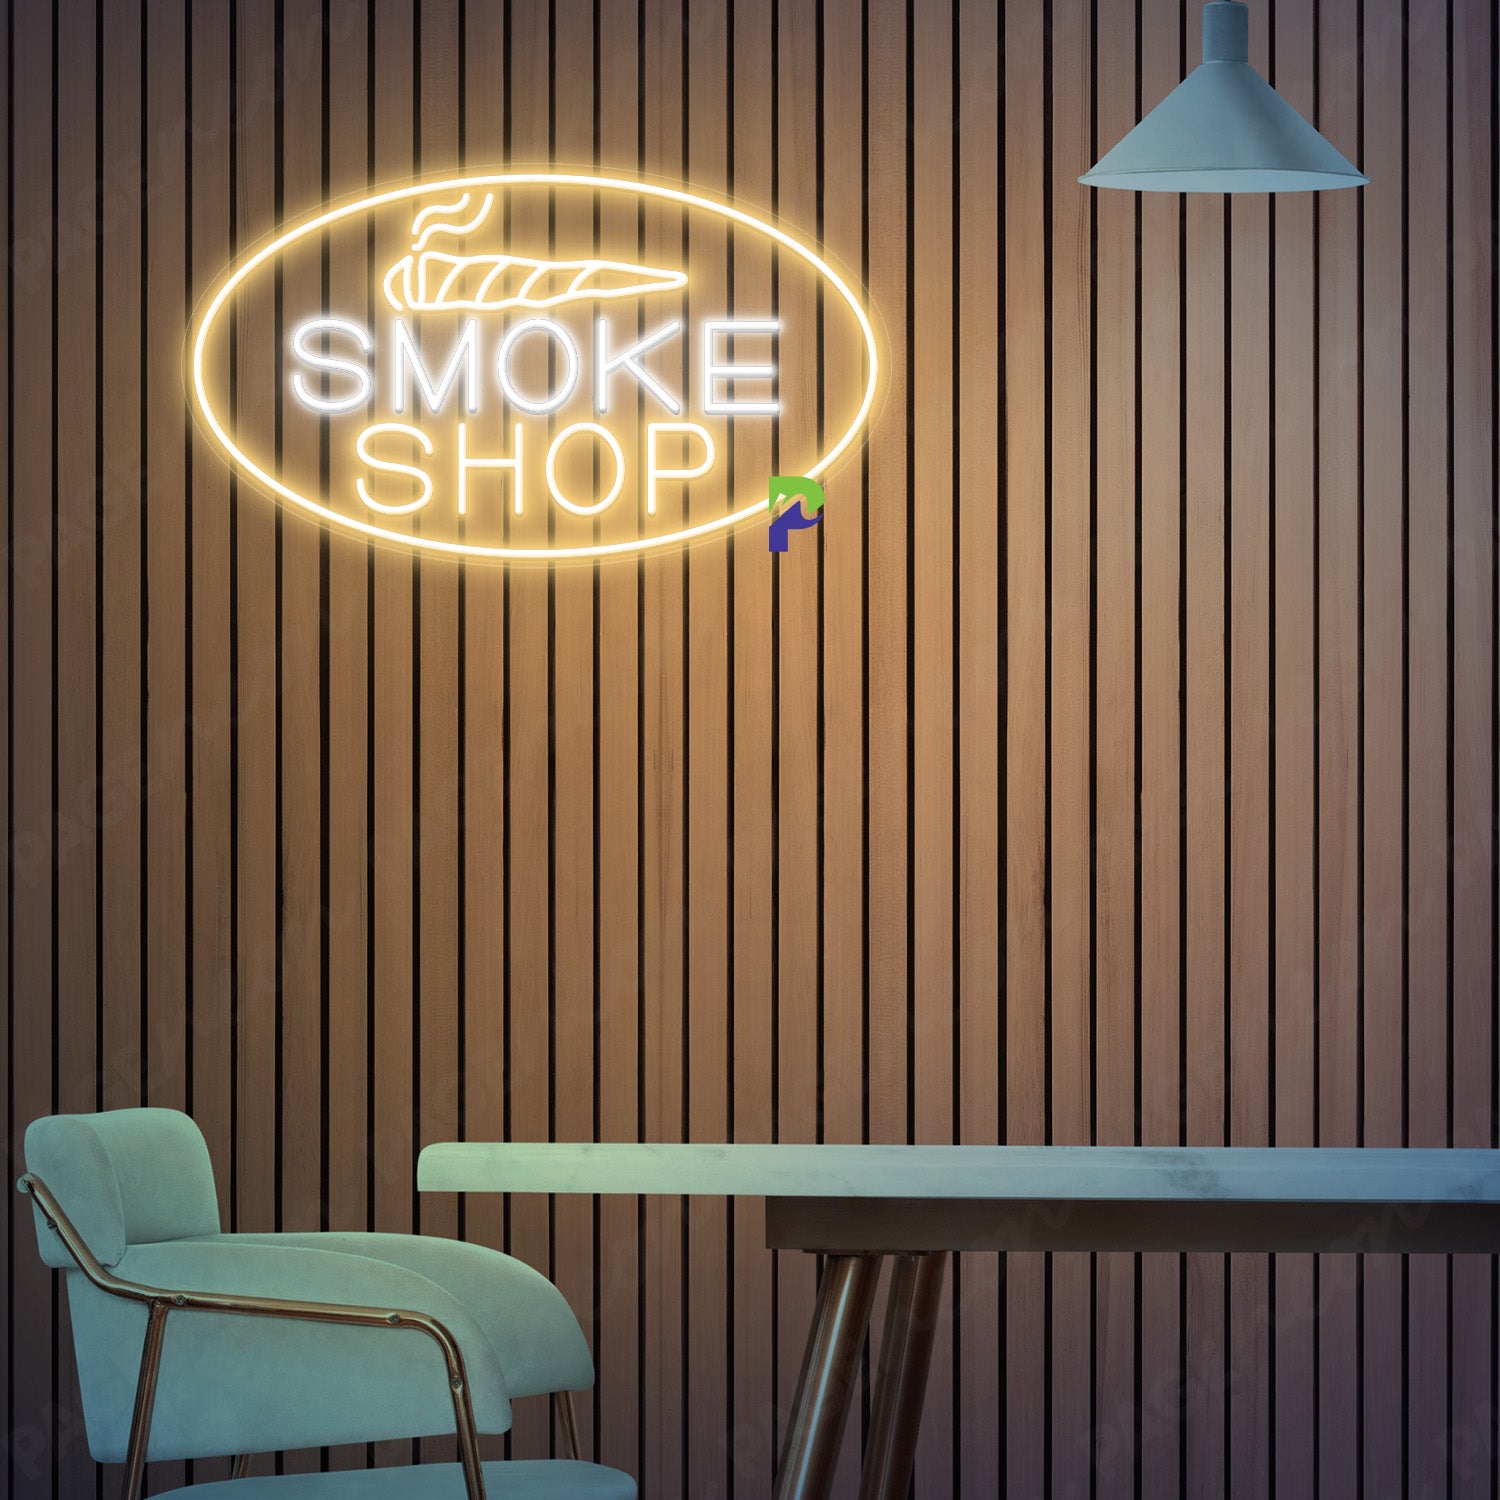 Smoke Shop Neon Sign Business Led Light